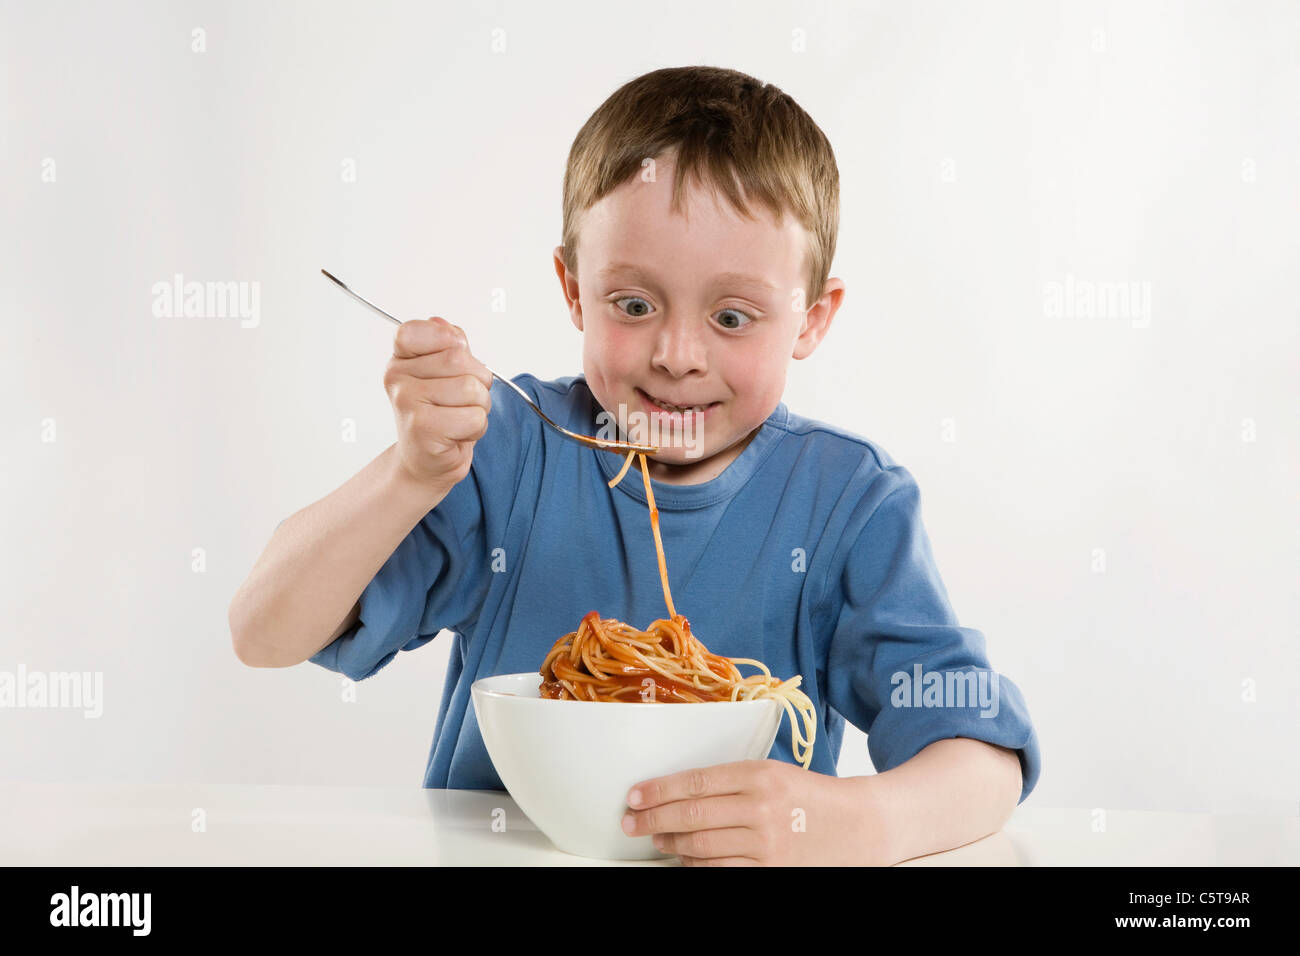 Boy (6-7) eating spaghetti, portrait Banque D'Images